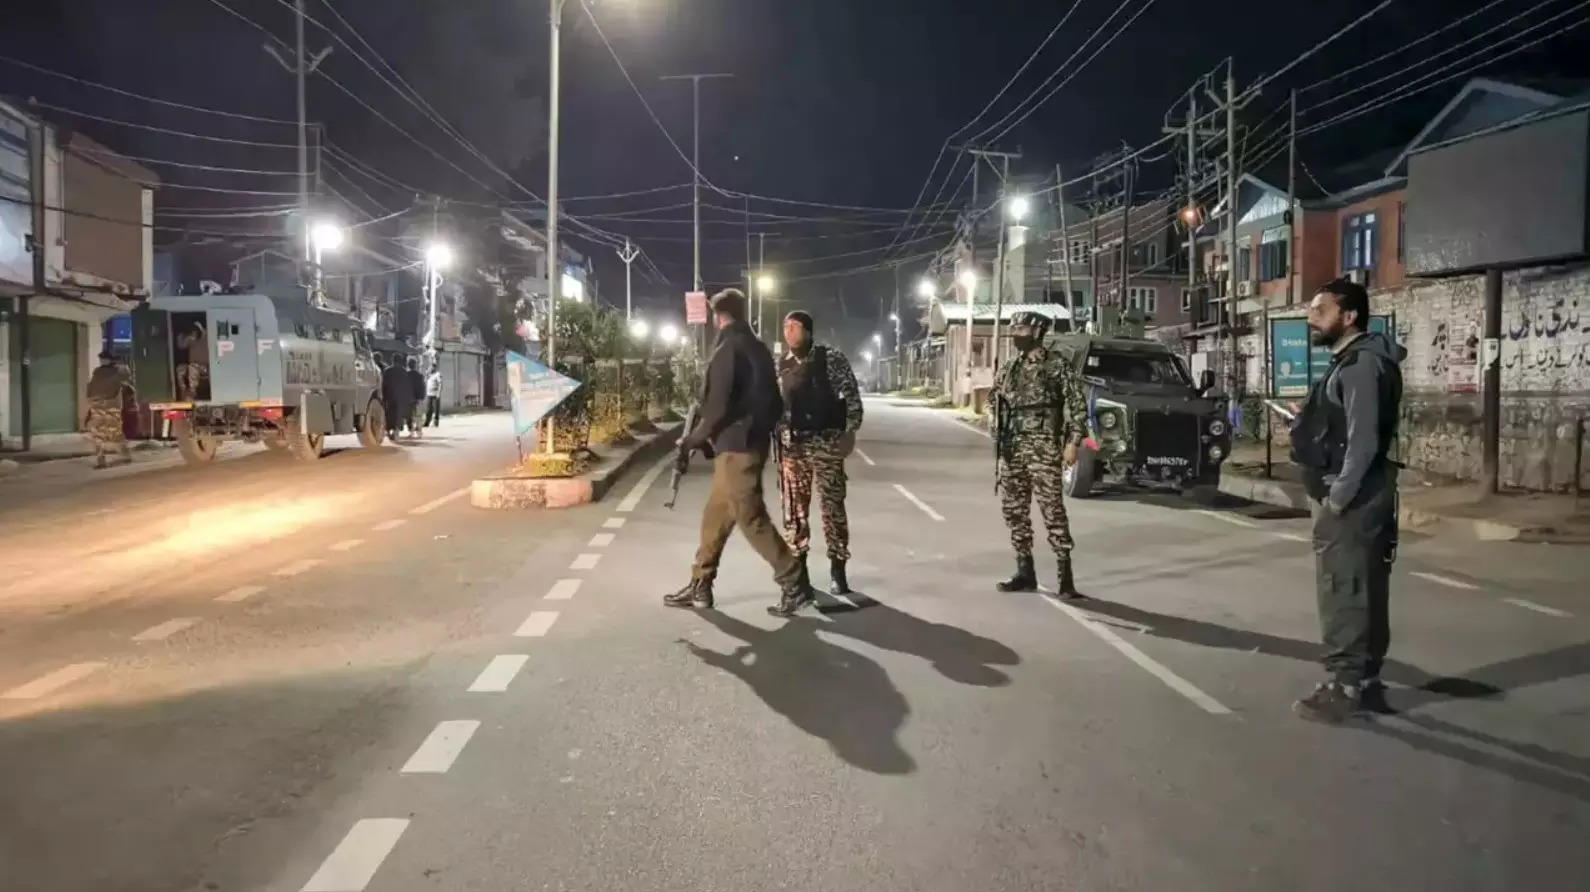 6. Major crackdown in Valley after 2 attacks